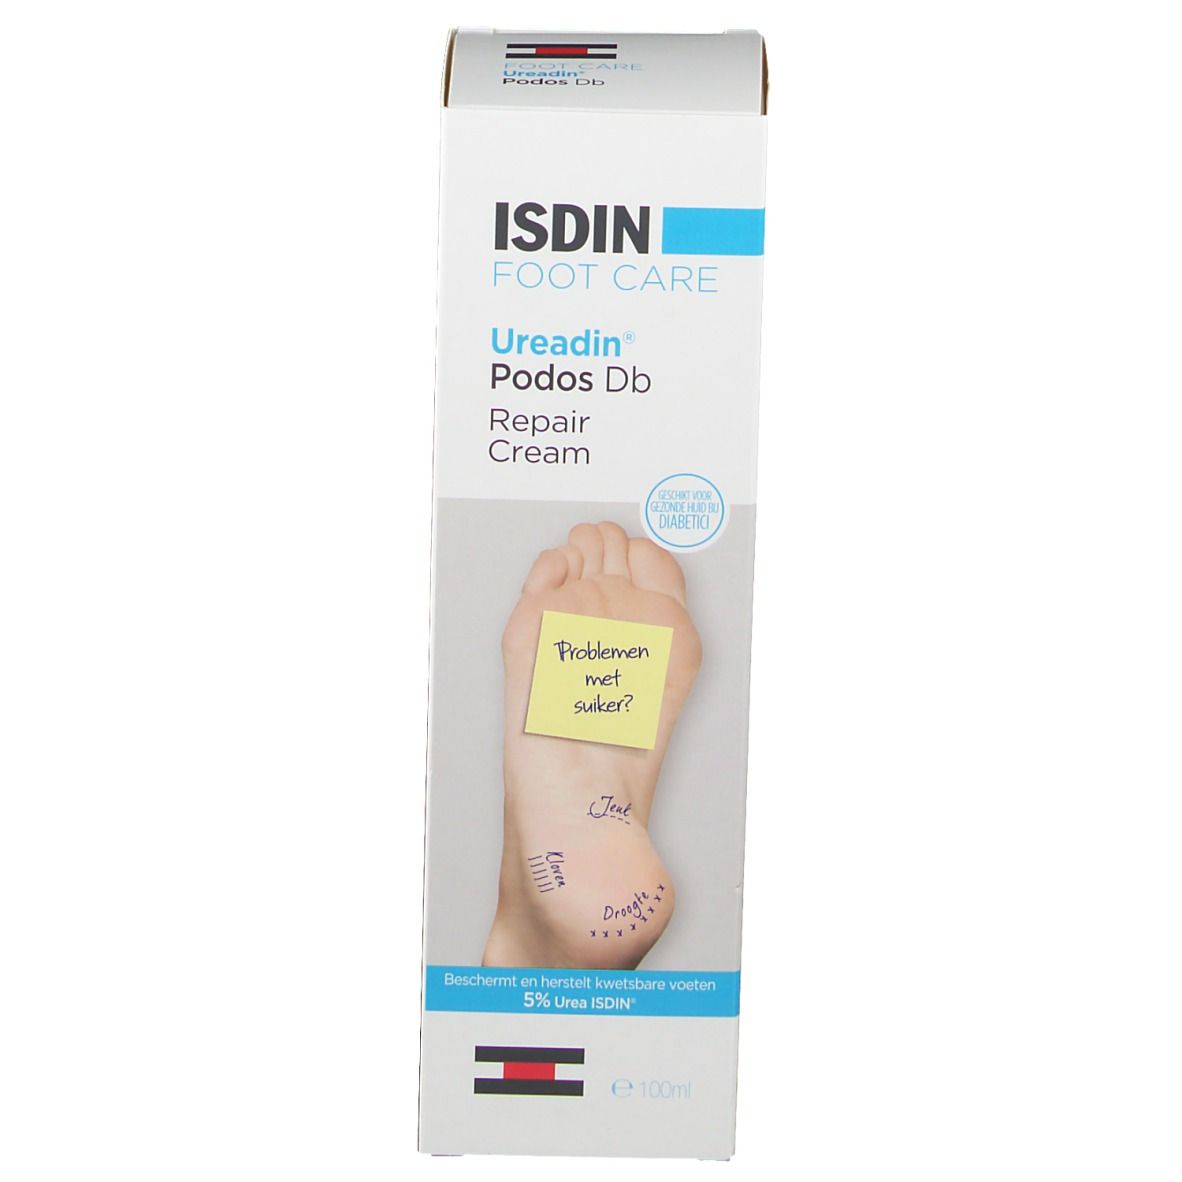 ISDIN Foot Care Ureadin® Podos Db Crème Réparatrice Pieds fragiles